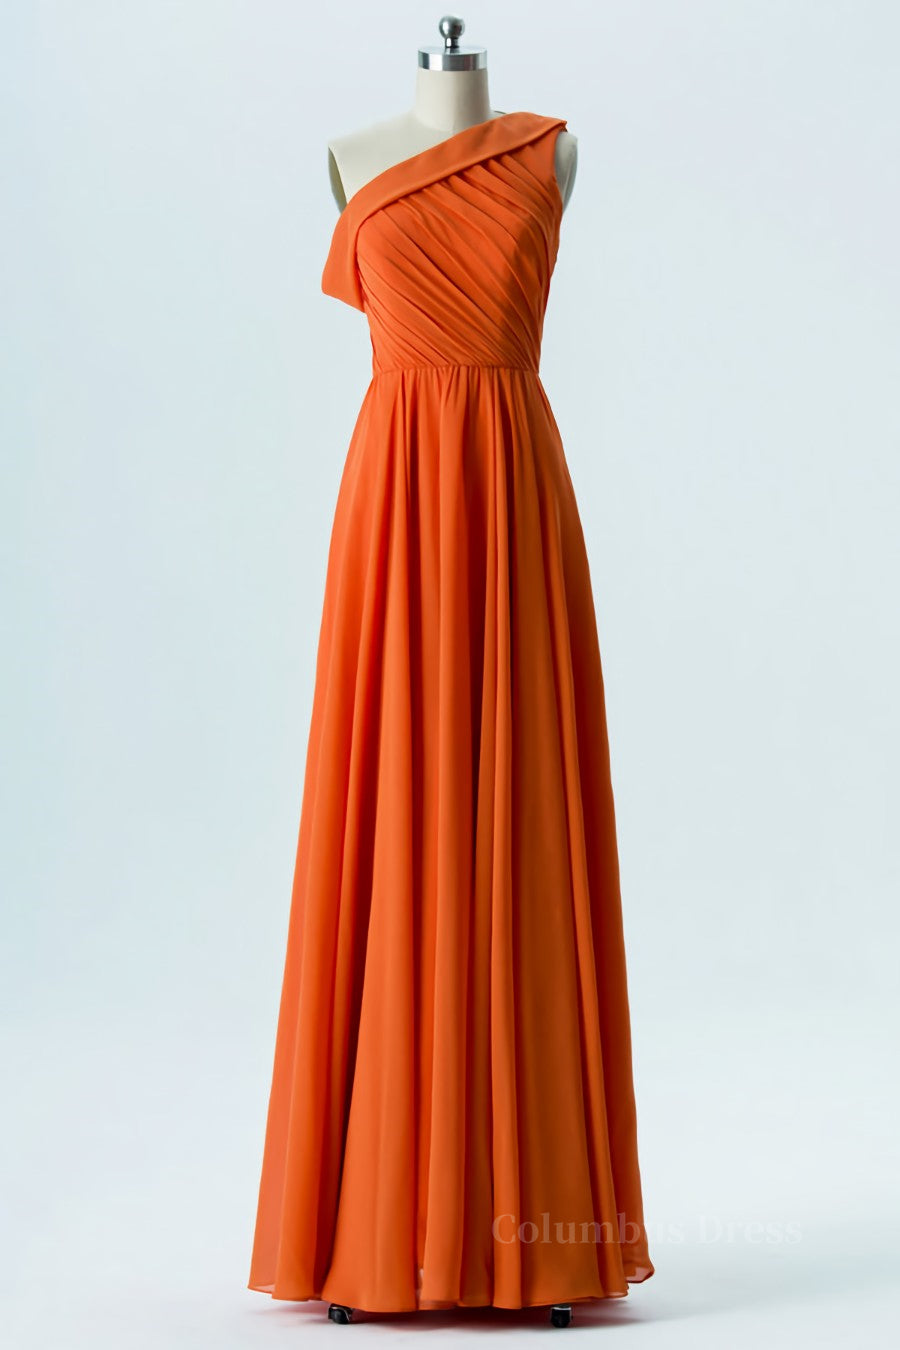 One Shoulder Orange Chiffon A-line Long Corset Bridesmaid Dress outfit, Bridesmaid Dress Gold